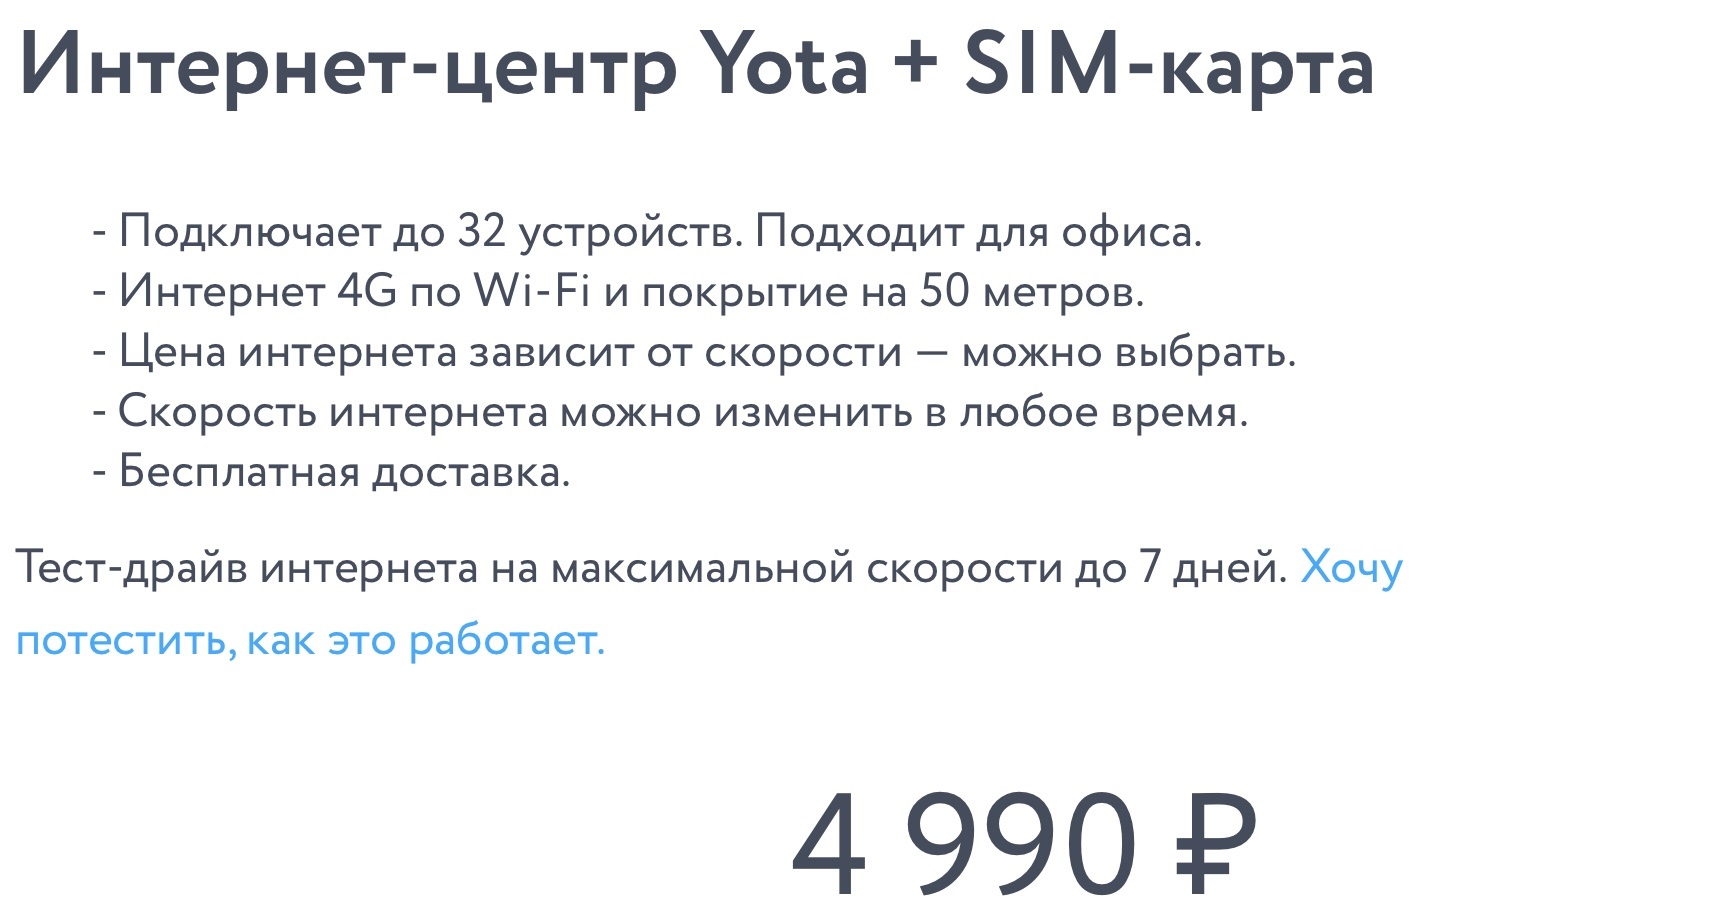 Интернет-центр-Yota-26260-MIMO-3g-4g-antenna-ru-sotovaya-надо улучшить 4G